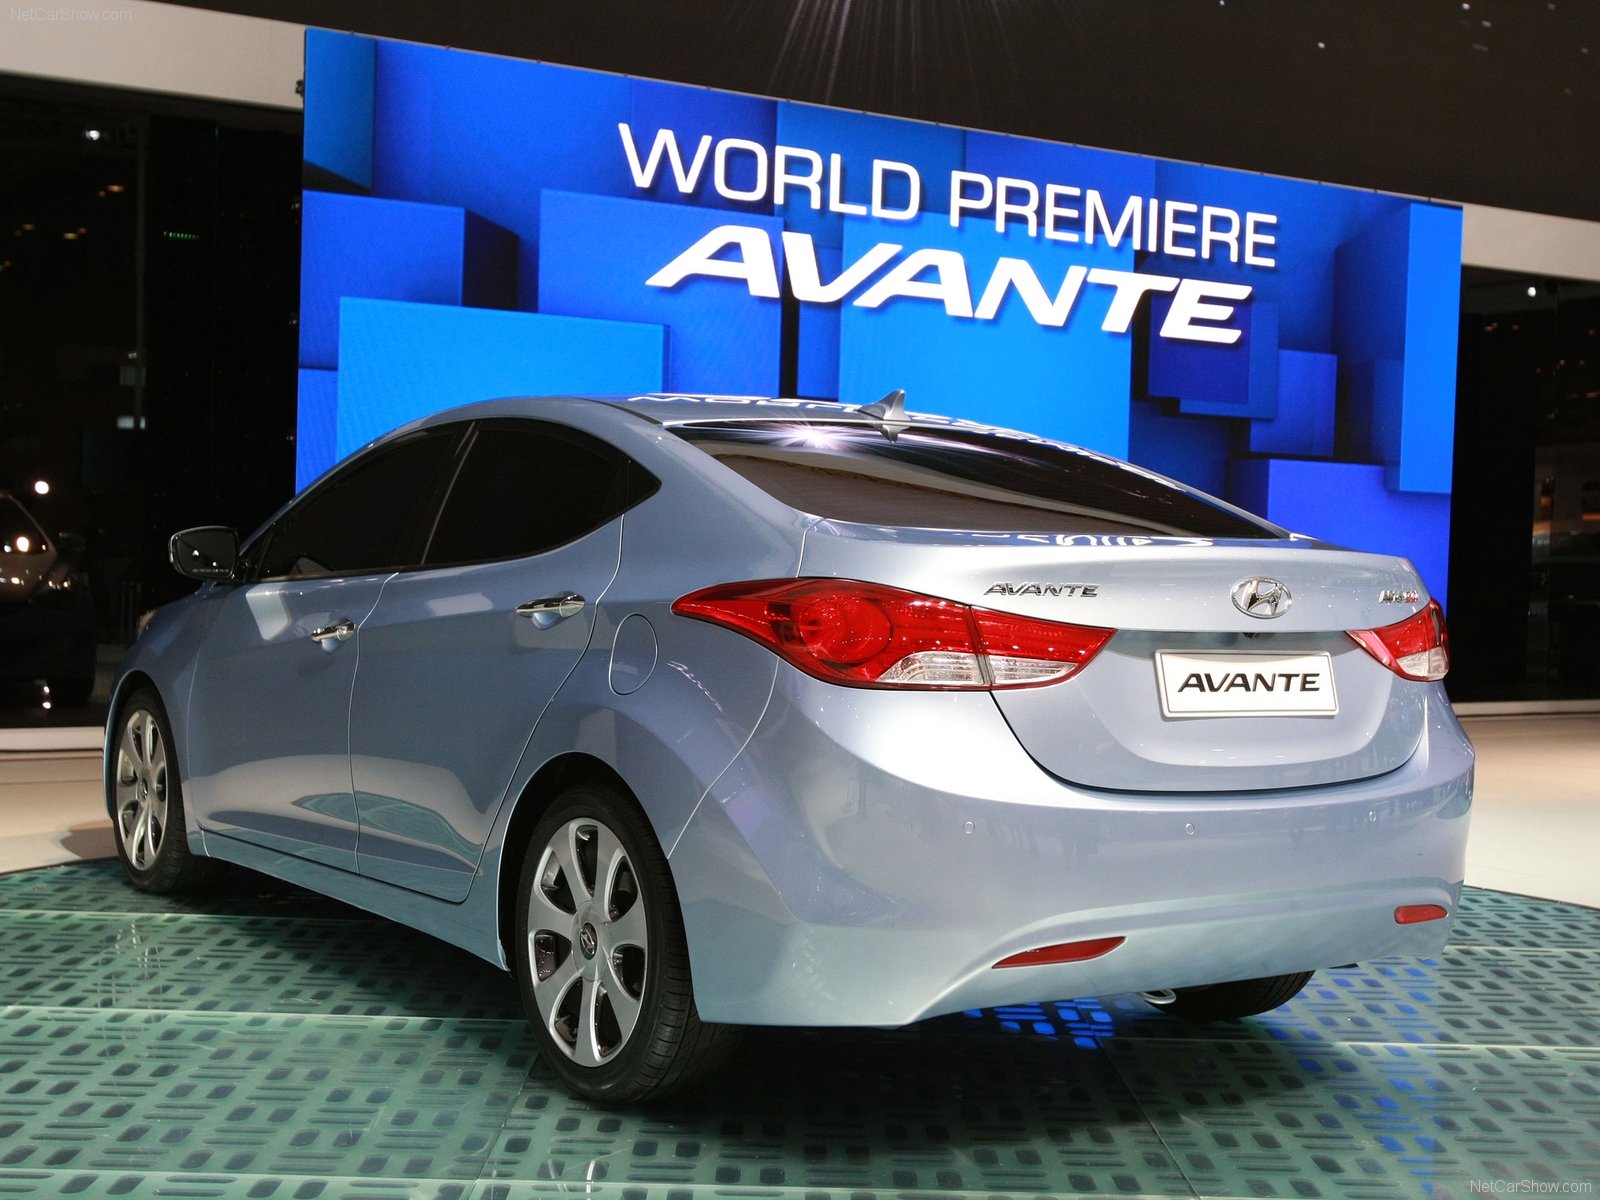 Hyundai Avante (Хюндай Аванте) 2020 - обзор модели c фото и видео